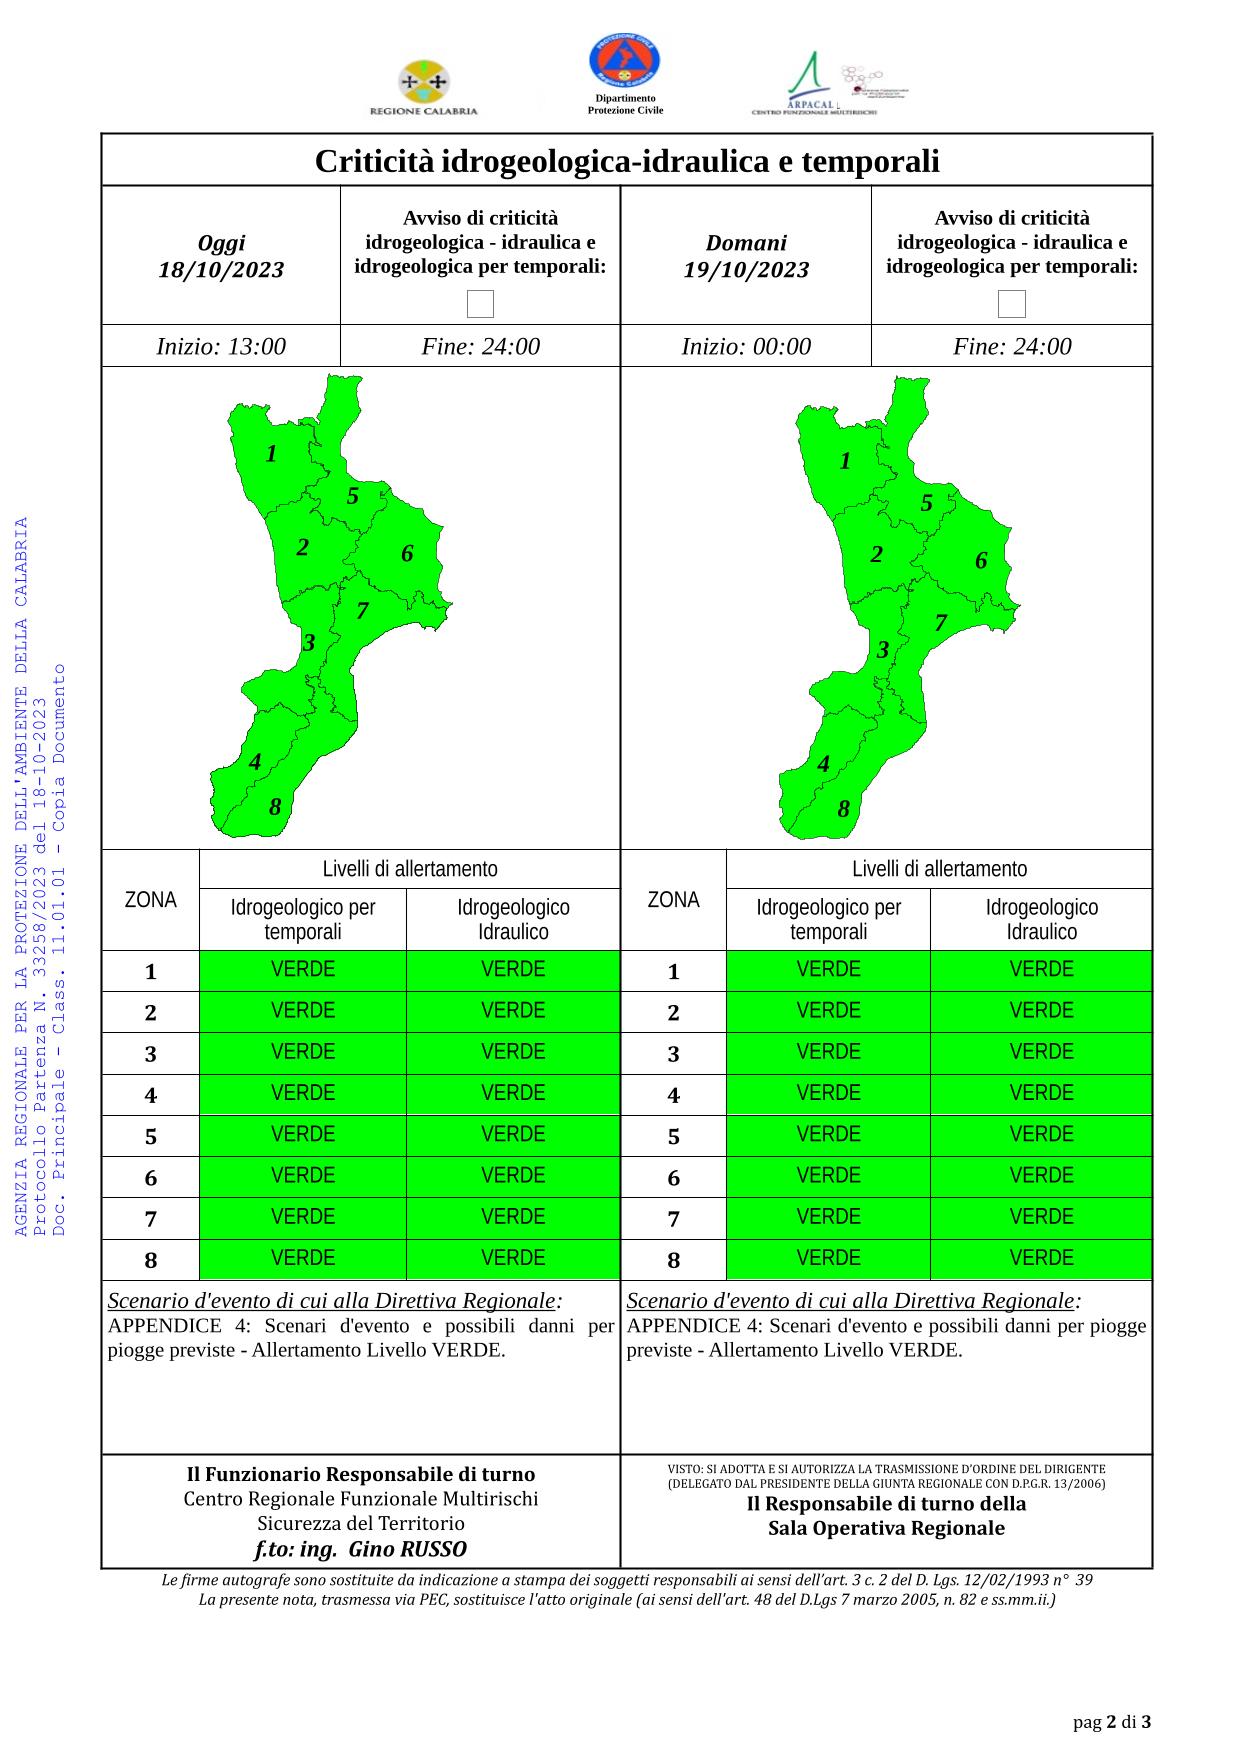 Criticità idrogeologica-idraulica e temporali in Calabria 18-10-2023